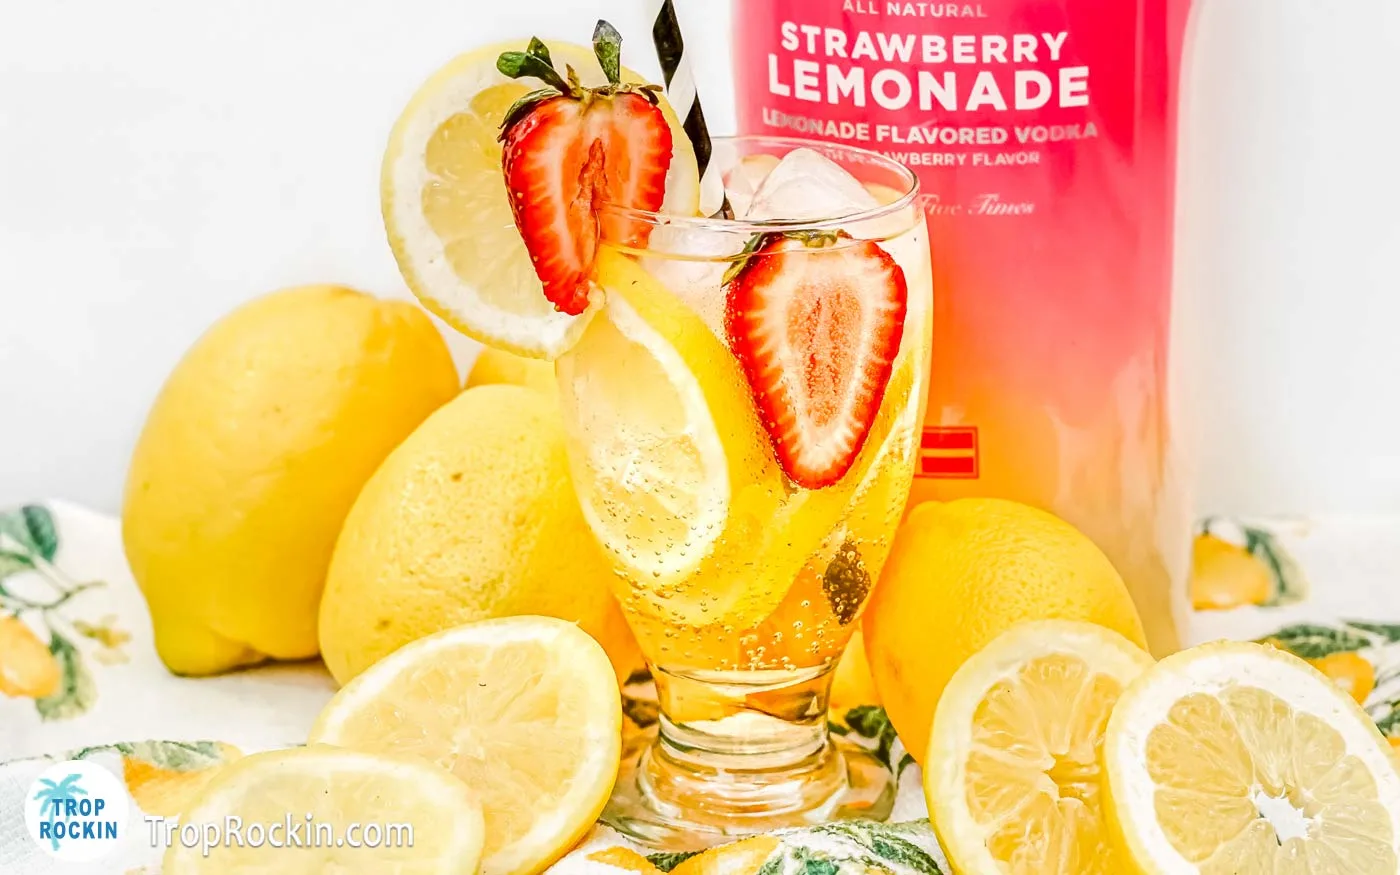 Strawberry Lemonade Vodka Drink with lemon slices and fresh strawberry garnish.